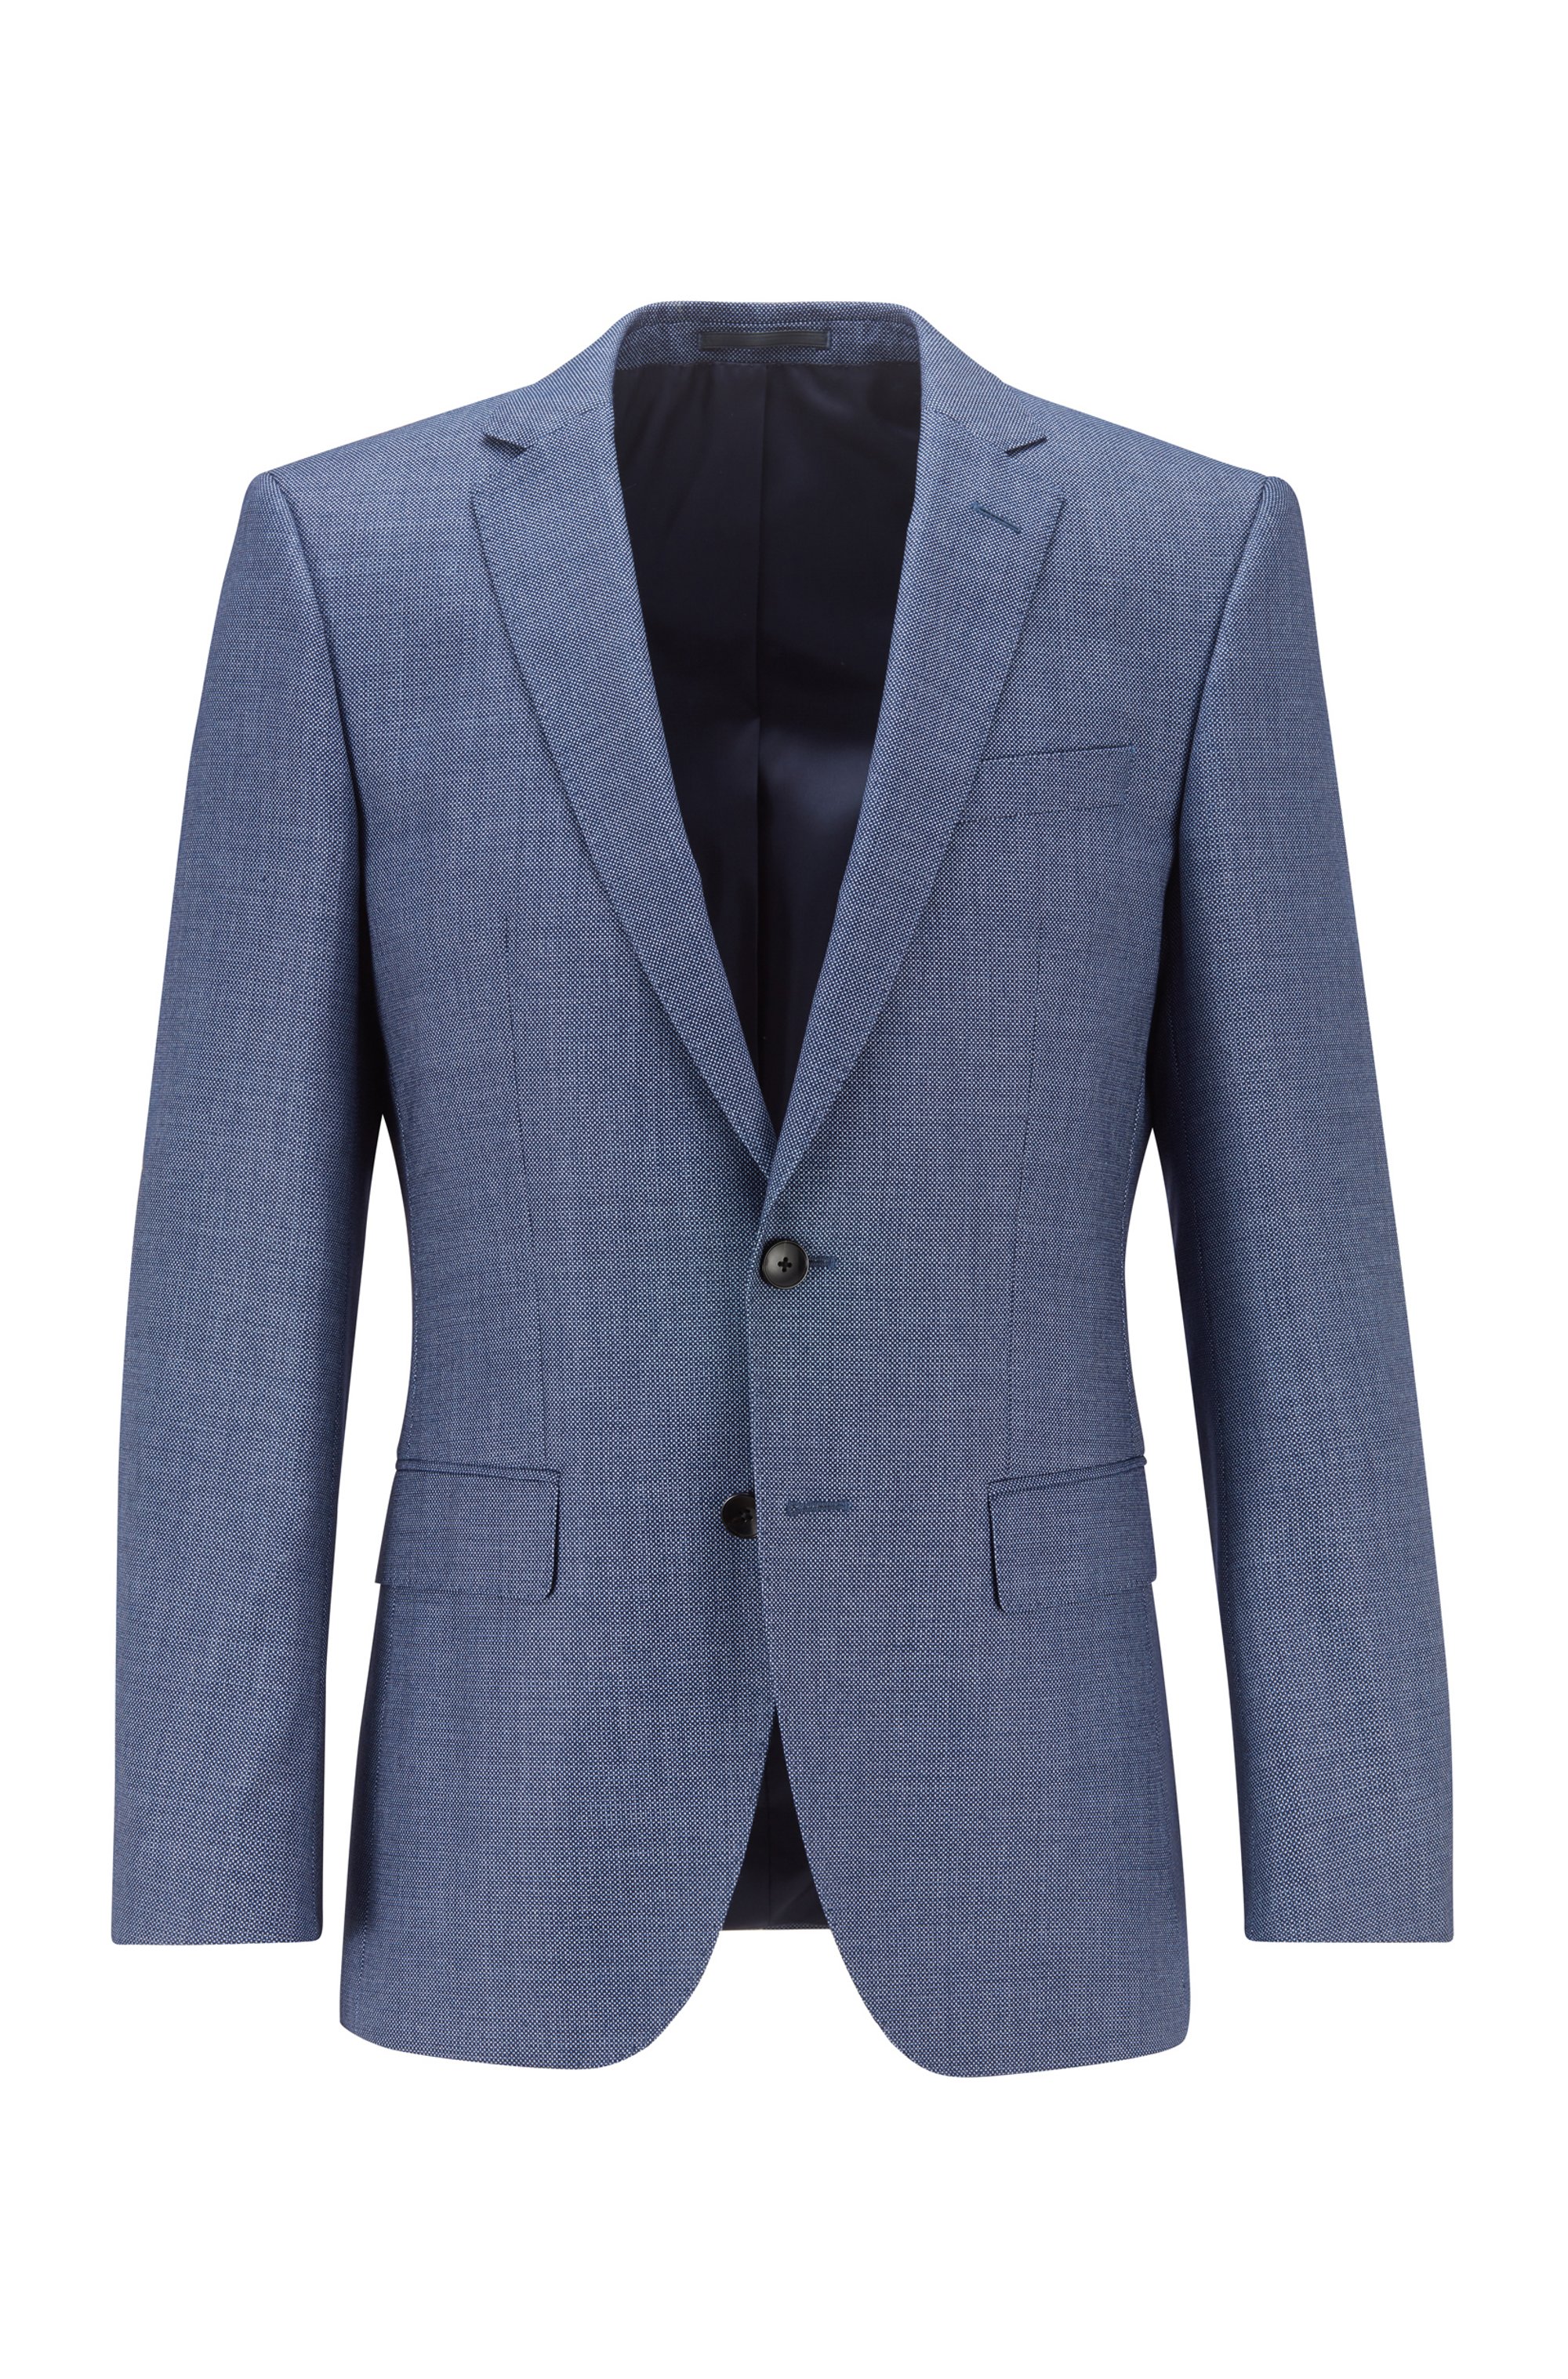 Slim-fit jacket in a patterned wool blend, Light Blue